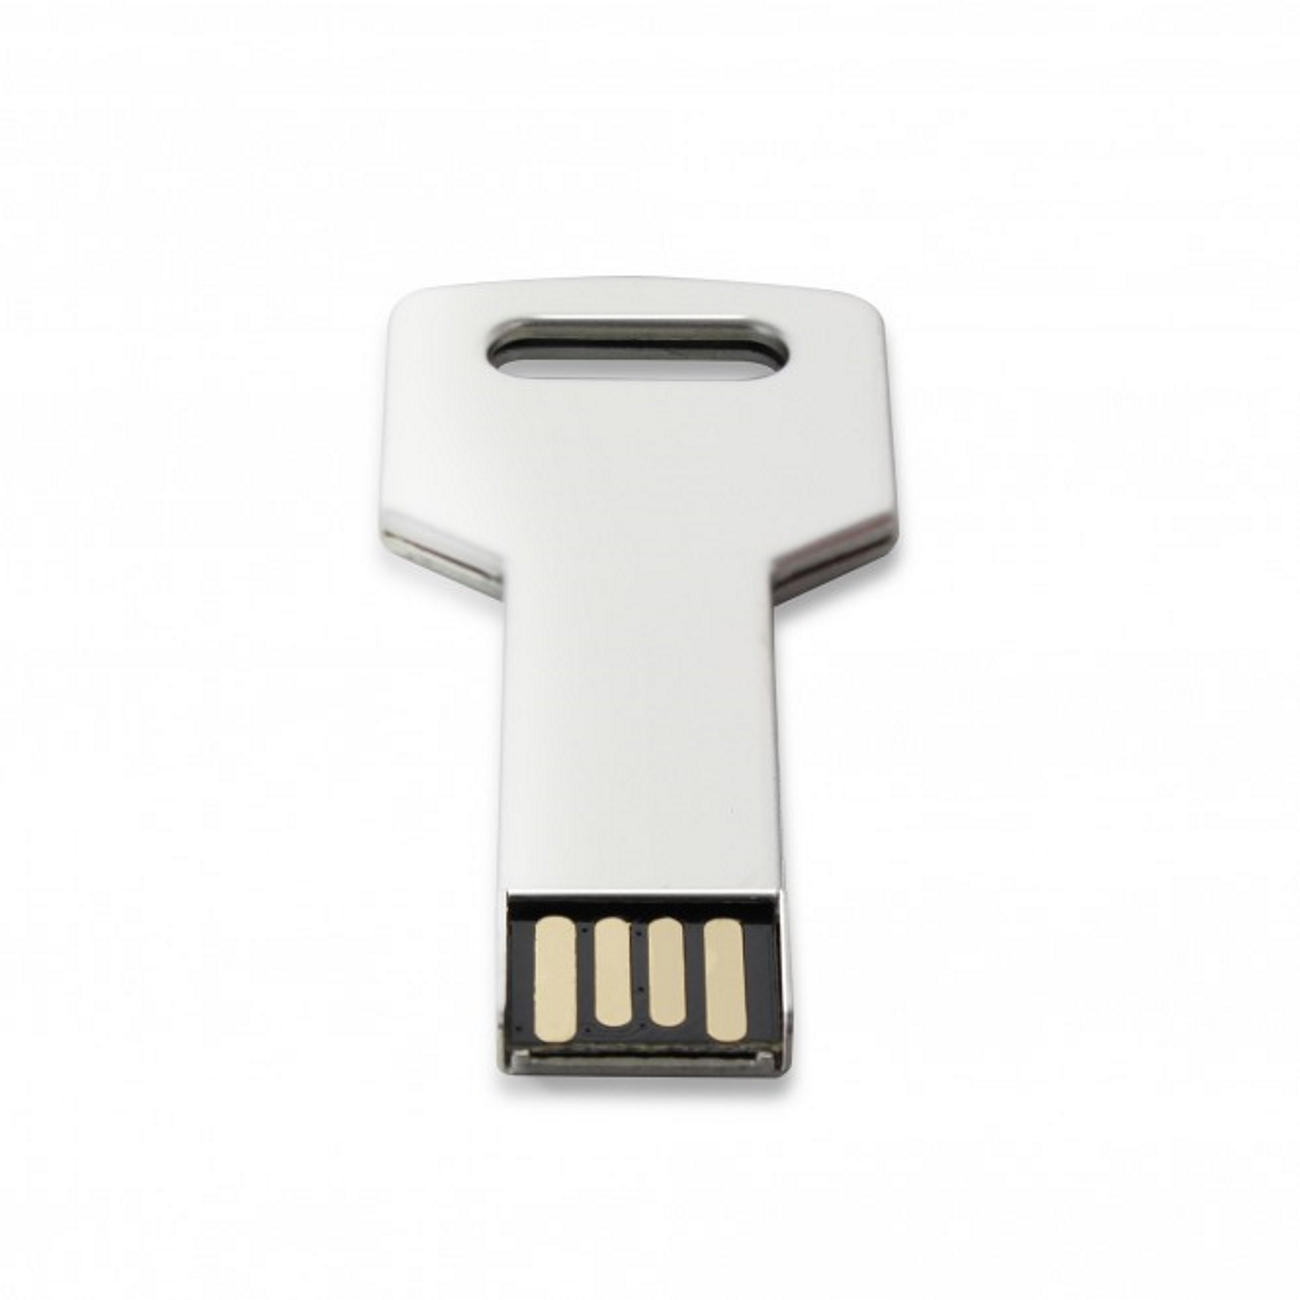 USB GERMANY ®Schlüssel 1 USB-Stick GB) Key (Silber,